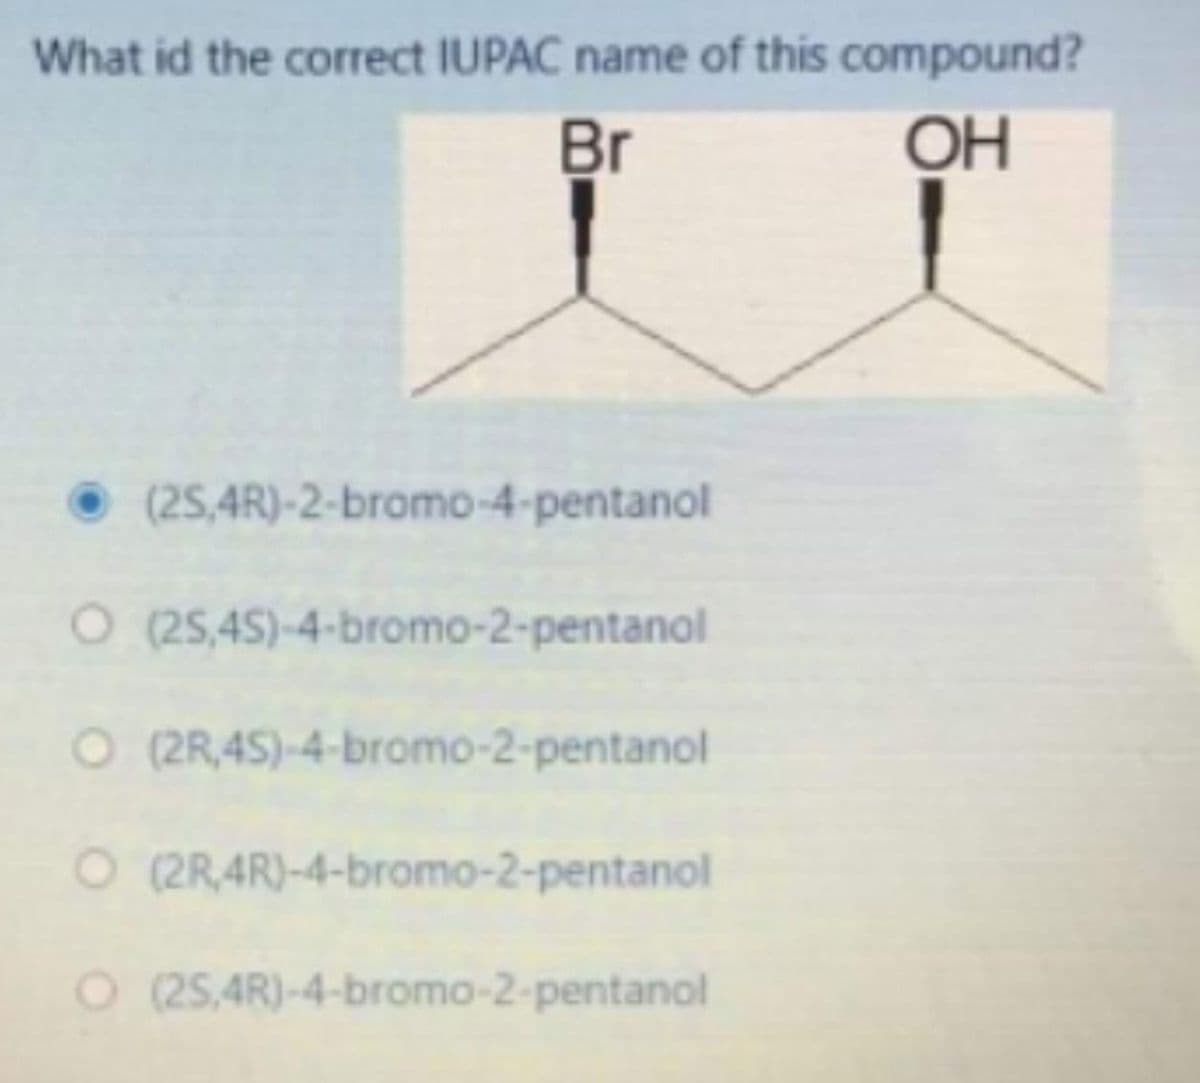 What id the correct IUPAC name of this compound?
Br
OH
• (25,4R)-2-bromo-4-pentanol
O (25,45)-4-bromo-2-pentanol
O (2R,45)-4-bromo-2-pentanol
O (2R,4R)-4-bromo-2-pentanol
O 25,4R)-4-bromo-2-pentanol
